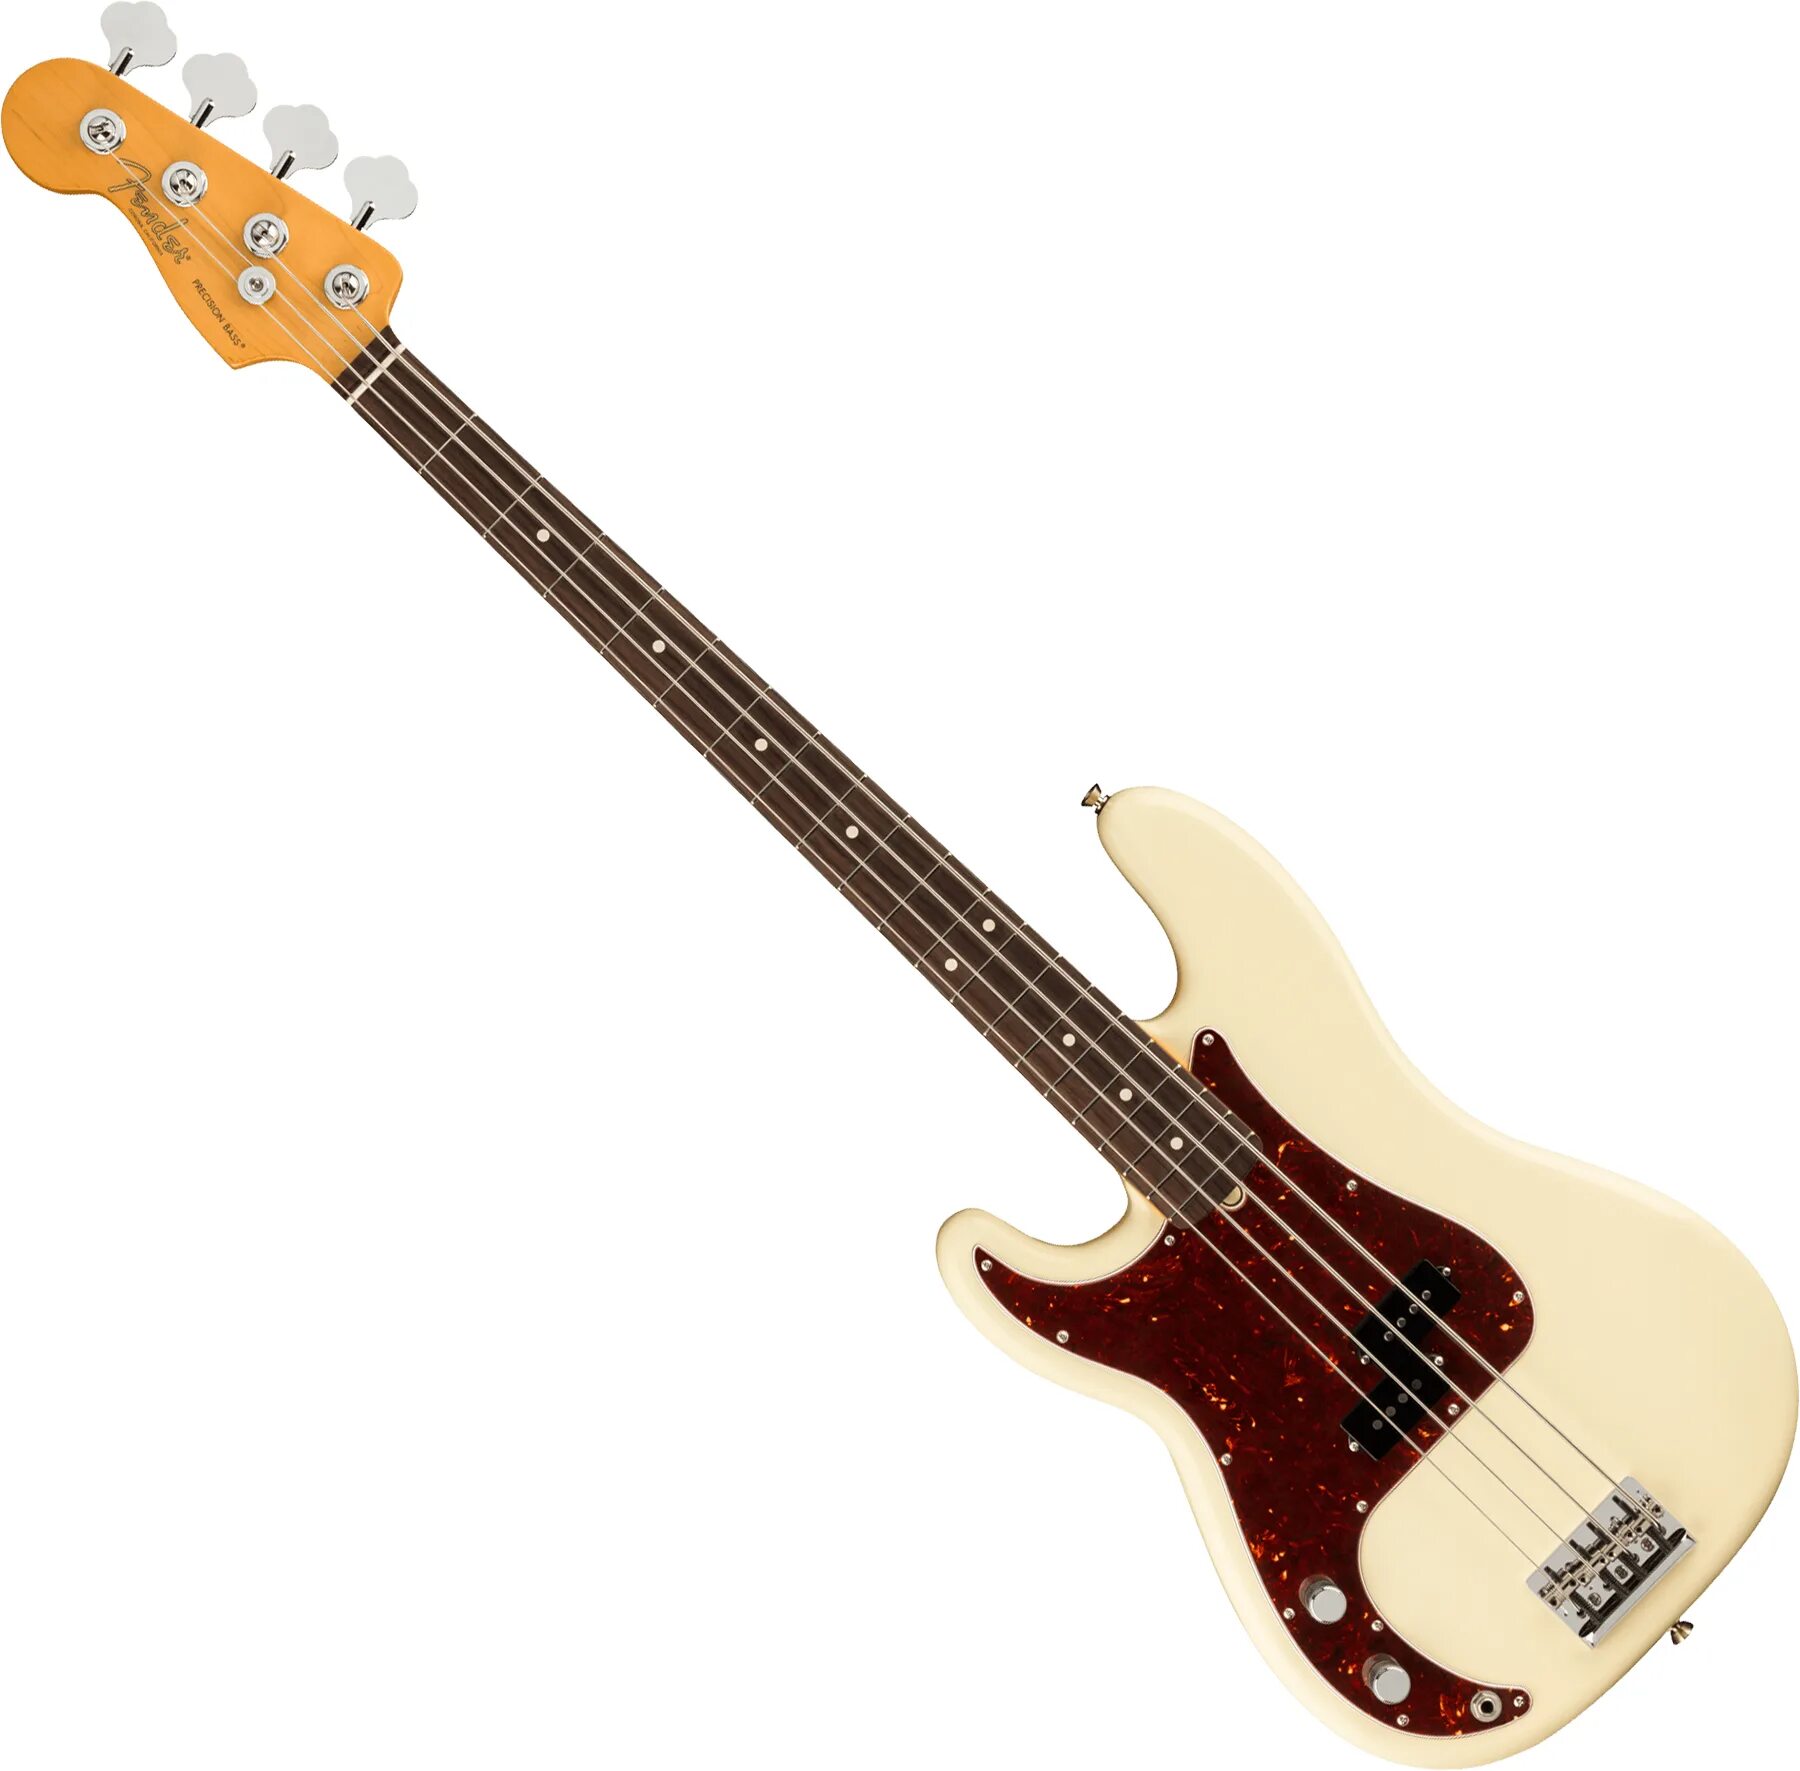 Bass white. Fender Jazz Bass American Deluxe 5. Fender Precision Bass. Fender Precision Bass Deluxe. Fender American Deluxe Jazz Bass v.